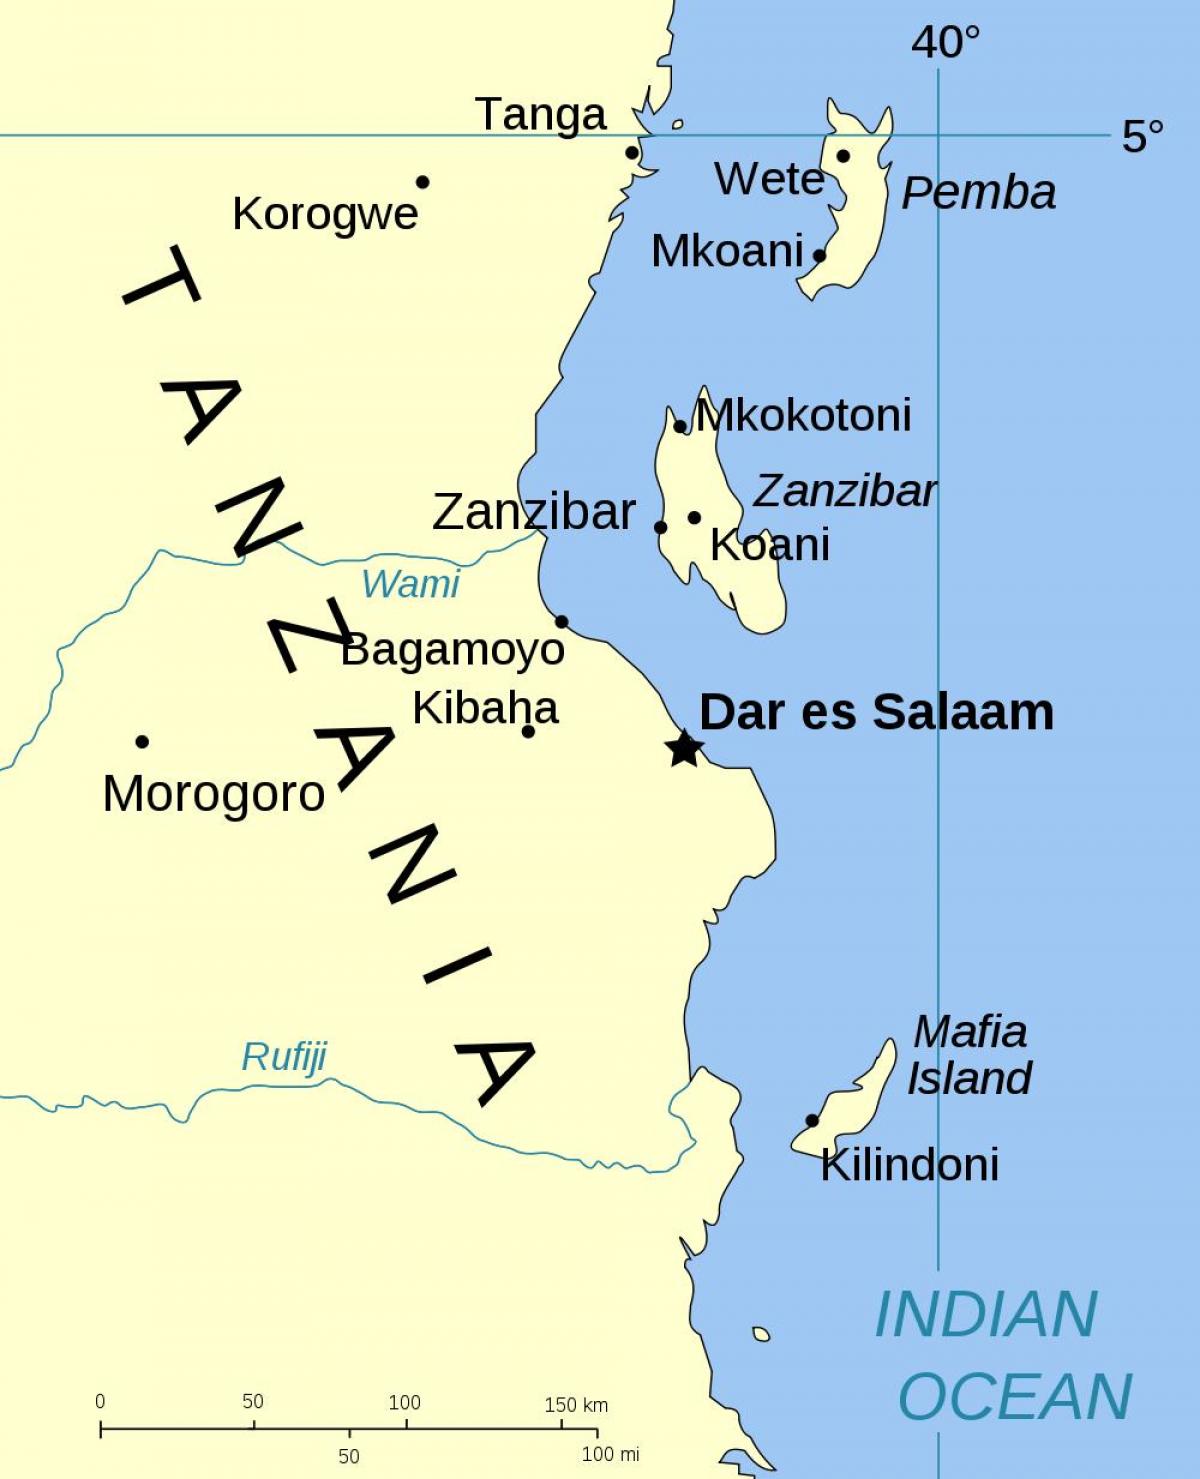 Pemba島タンザニア地図 タンザニア諸島の地図 東アフリカ アフリカ